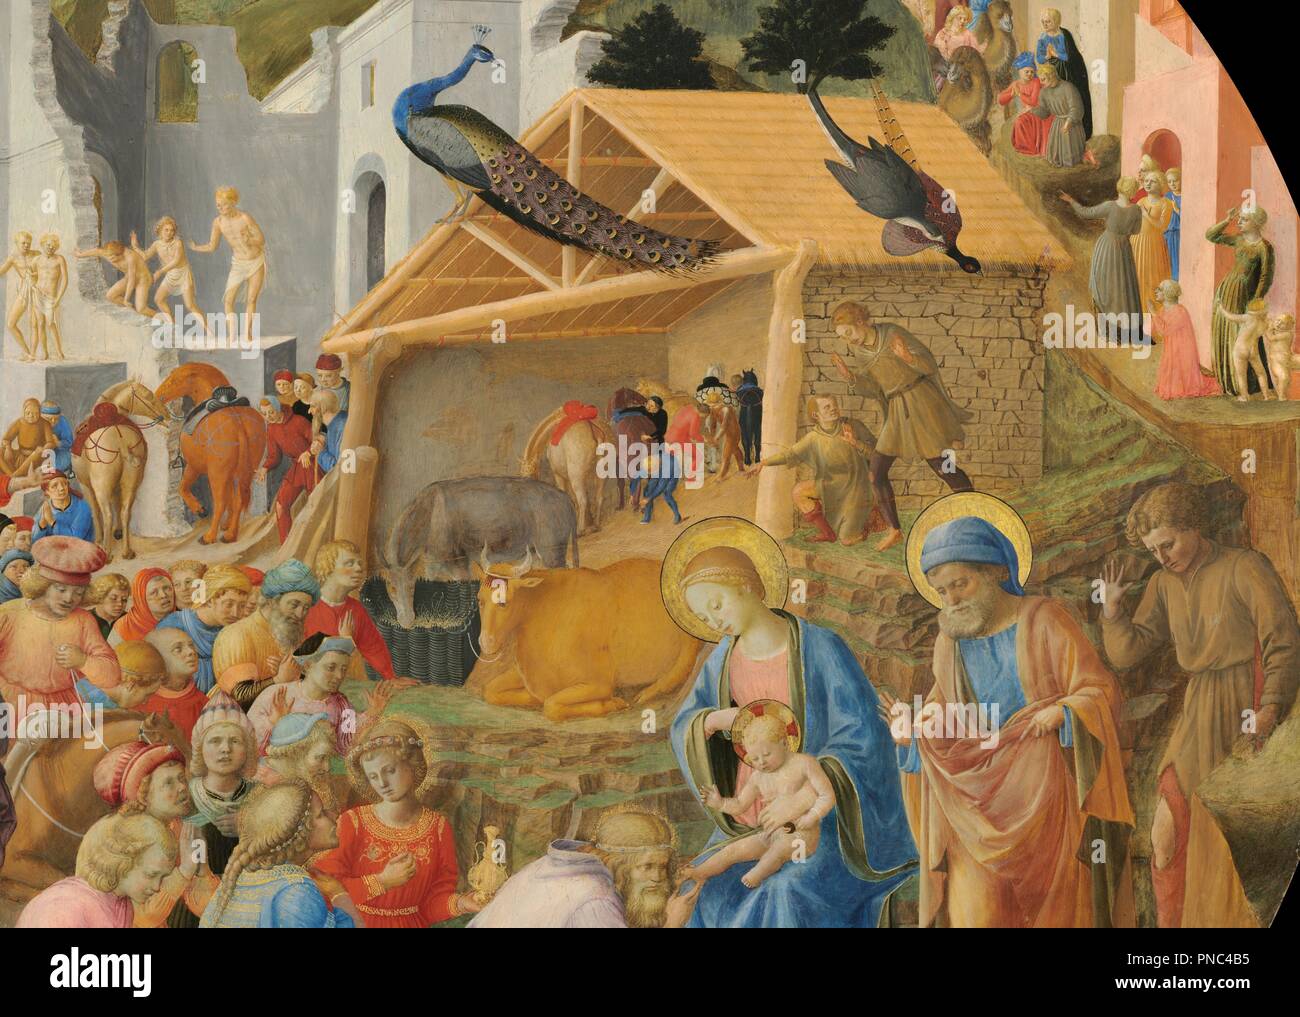 The Adoration of the Magi. Date/Period: Ca. 1440 - 1460. Painting. Tempera on panel. Diameter: 137.3 cm (54 in). Author: FRA ANGELICO. Fra Filippo Lippi. Lippi, Filippo. Stock Photo